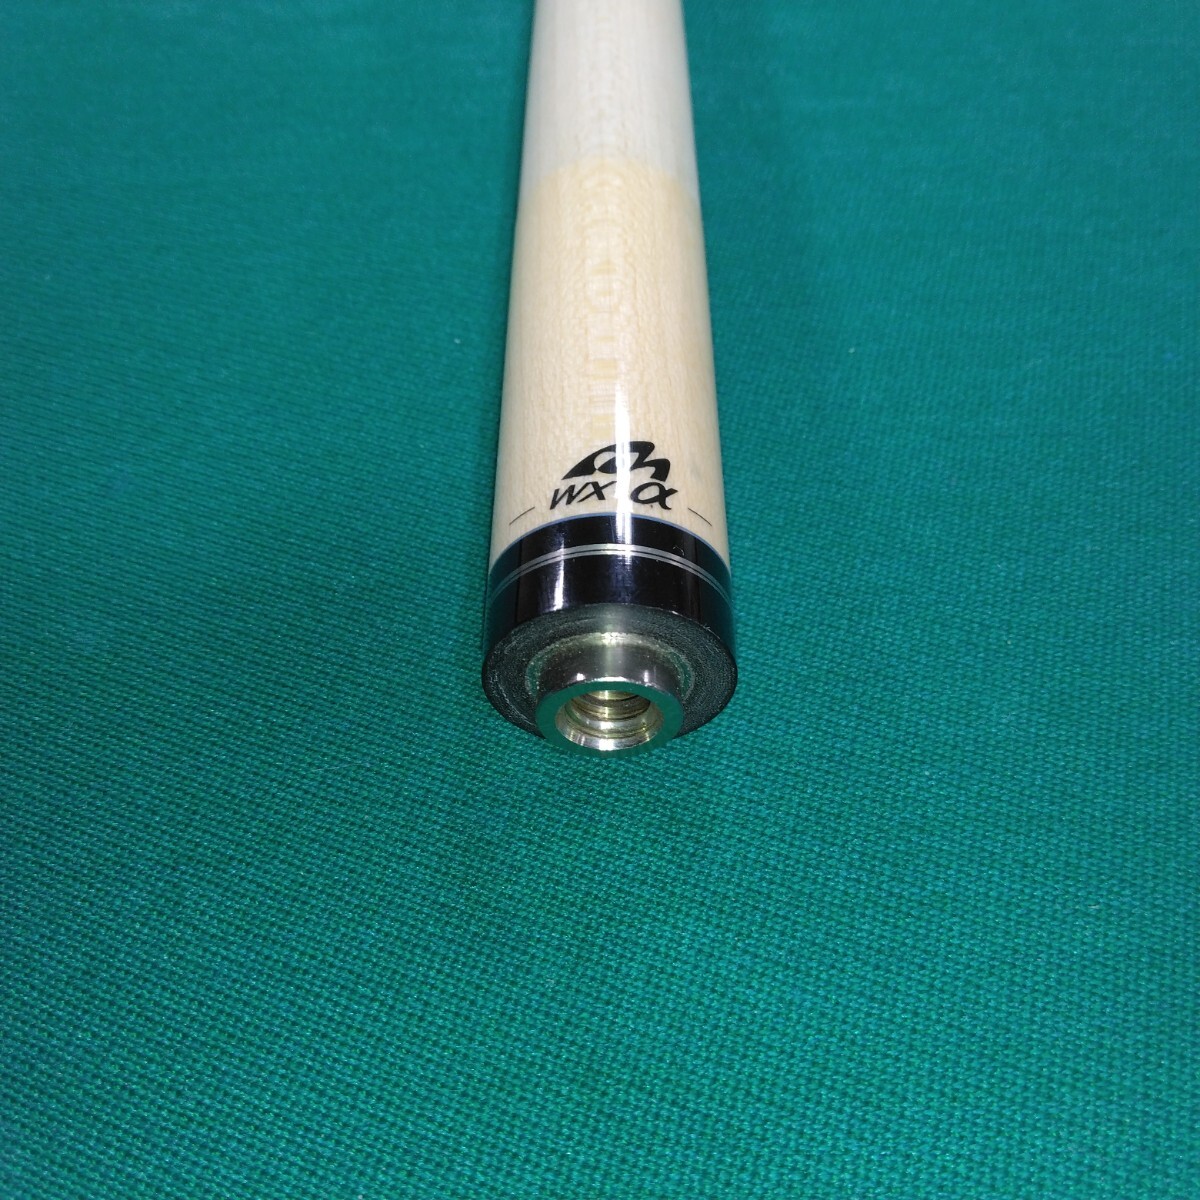  billiards shaft Mezz WX-α